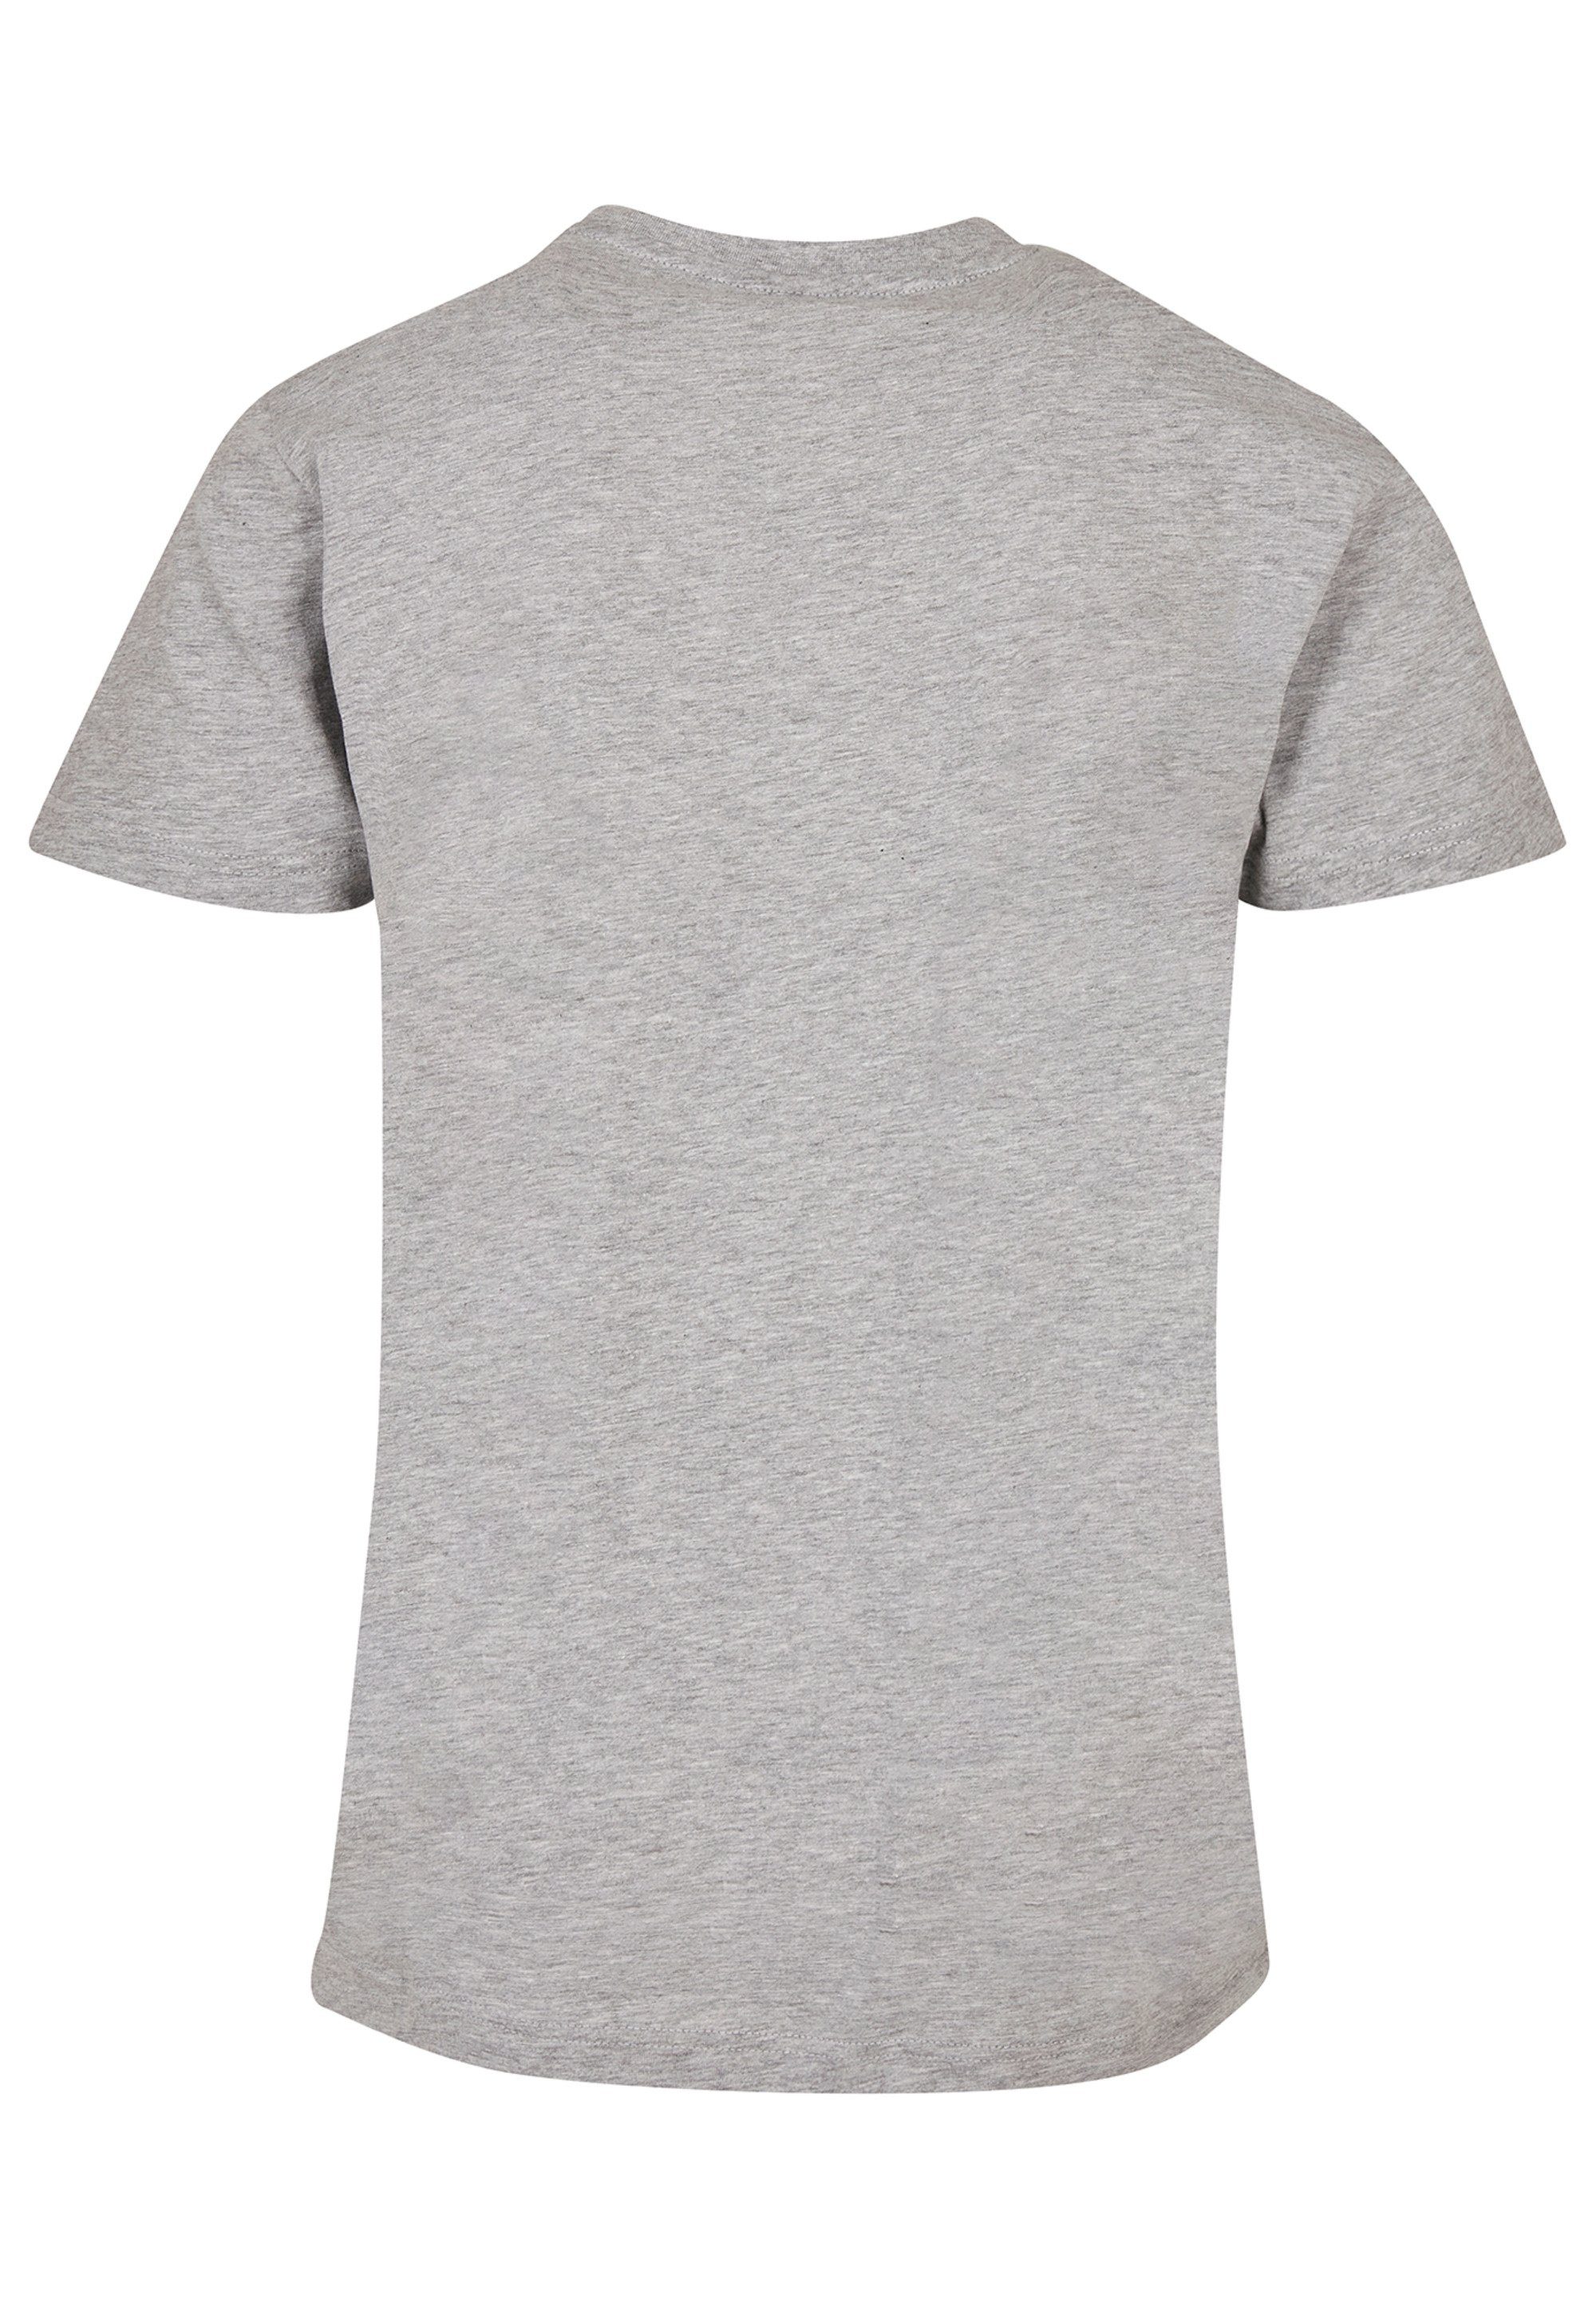 grey Collection Cities skyline - Hamburg Print F4NT4STIC T-Shirt heather